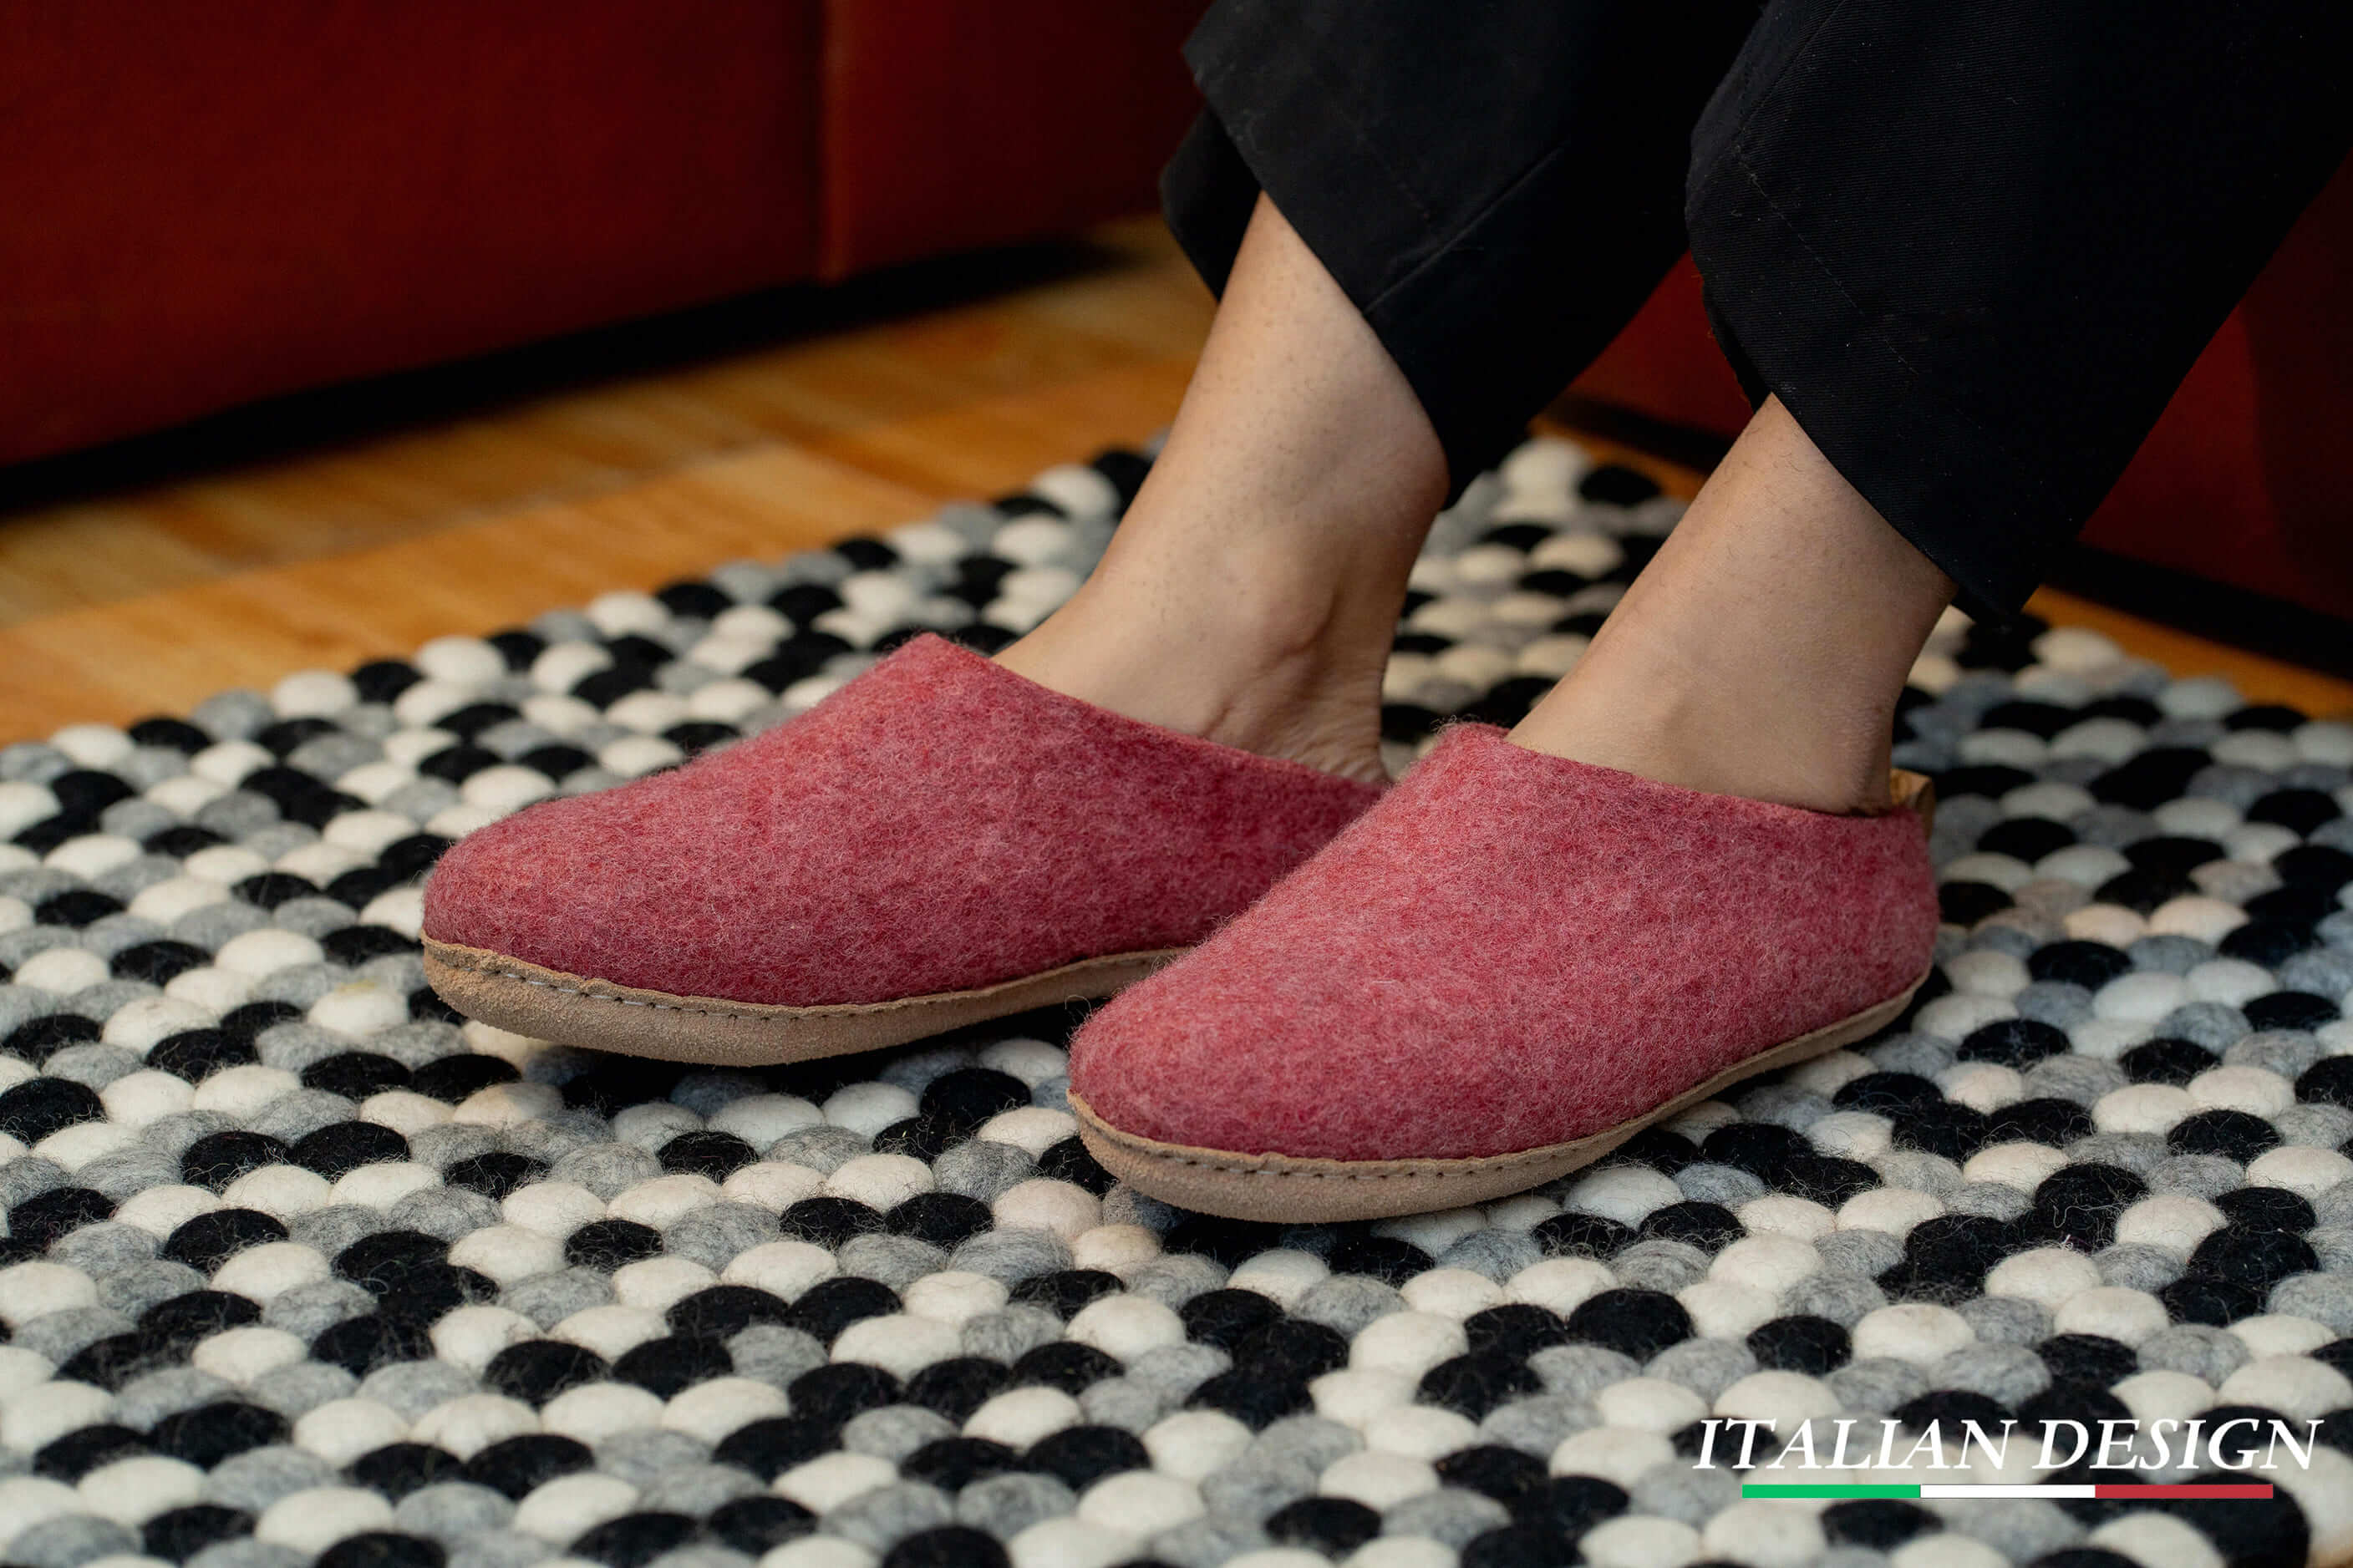 Indoor Open Heel Slippers With Leather Sole - Cherry PinkIndoor Open Heel Slippers With Leather Sole - Cherry Pink